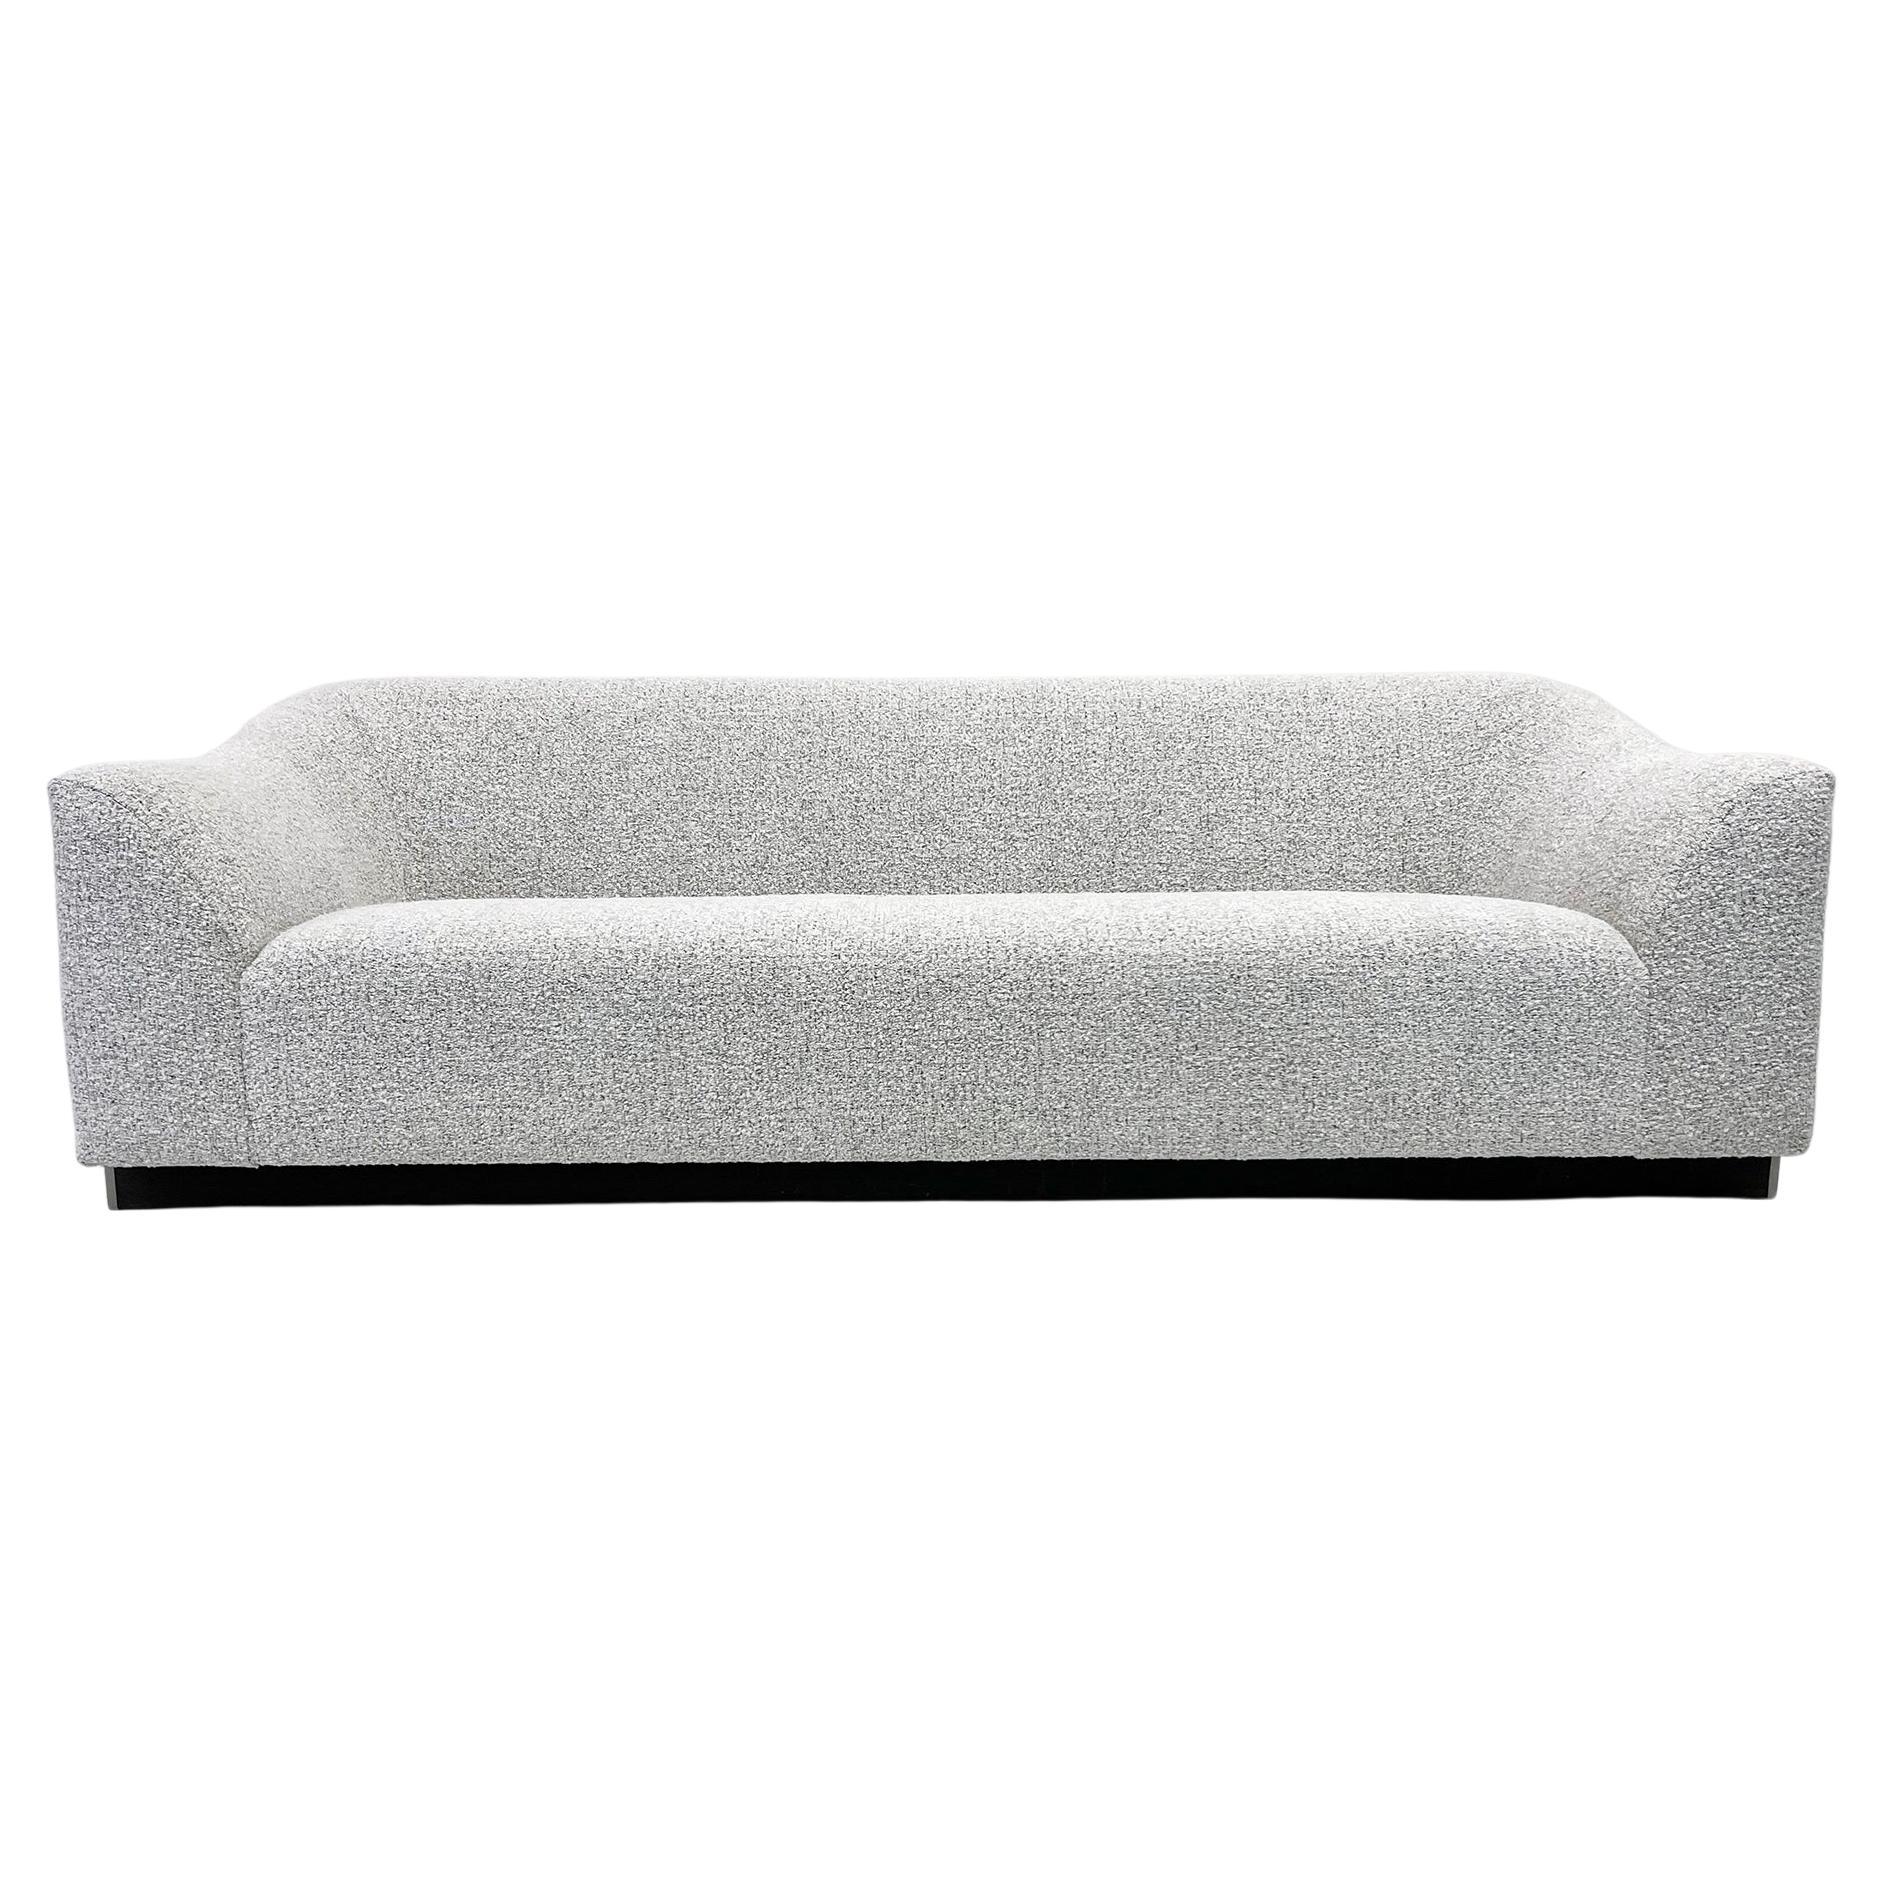 Eric Jourdan Snowdonia Modern Sofa for Ligne Roset in Black and White Boucle For Sale